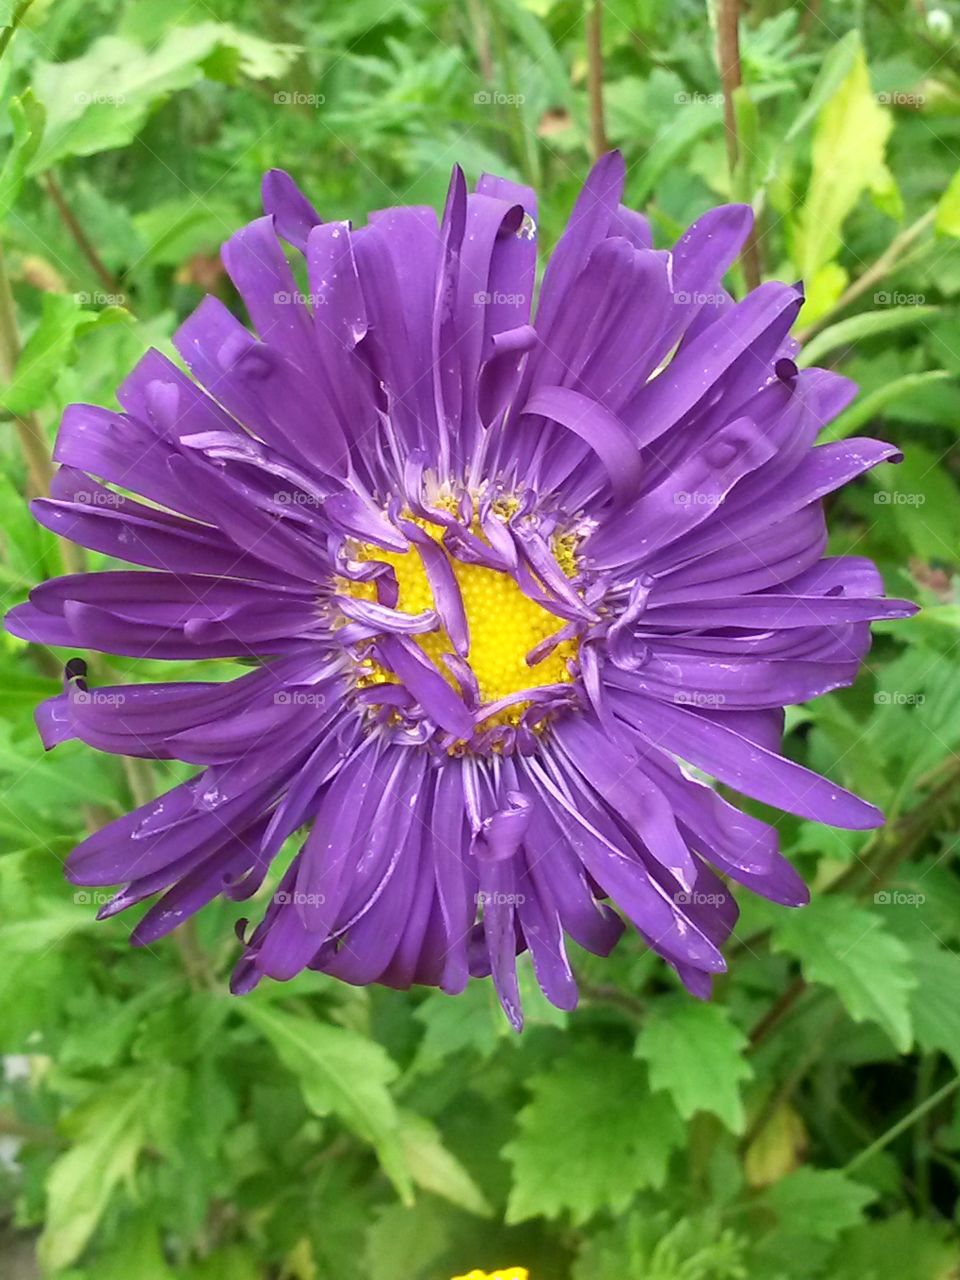 Nice flower